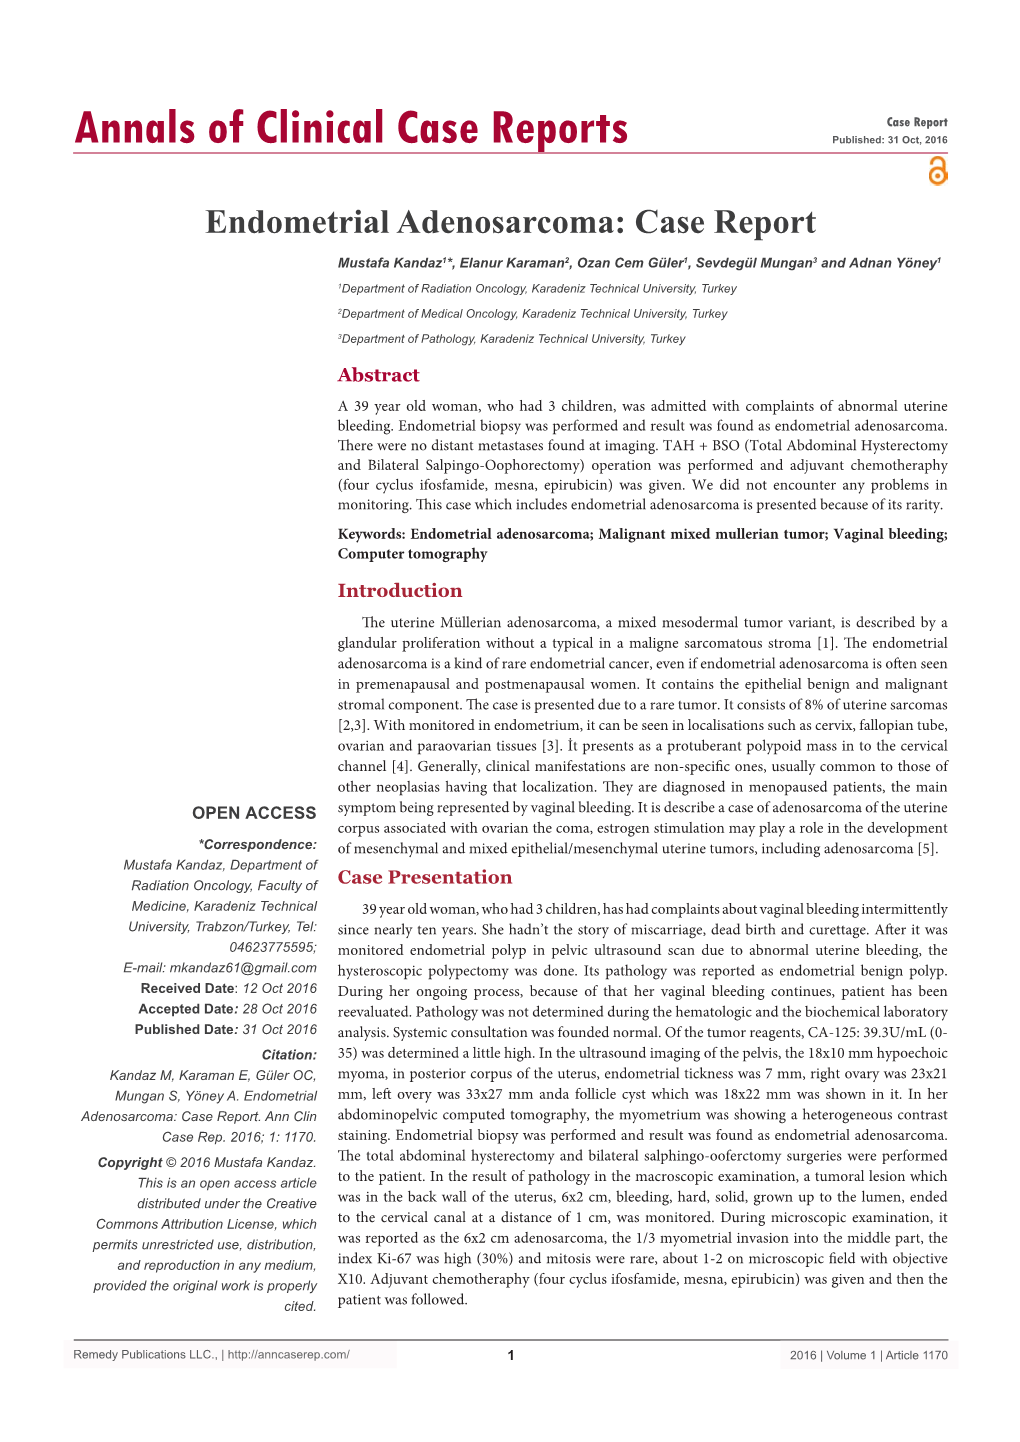 Endometrial Adenosarcoma: Case Report